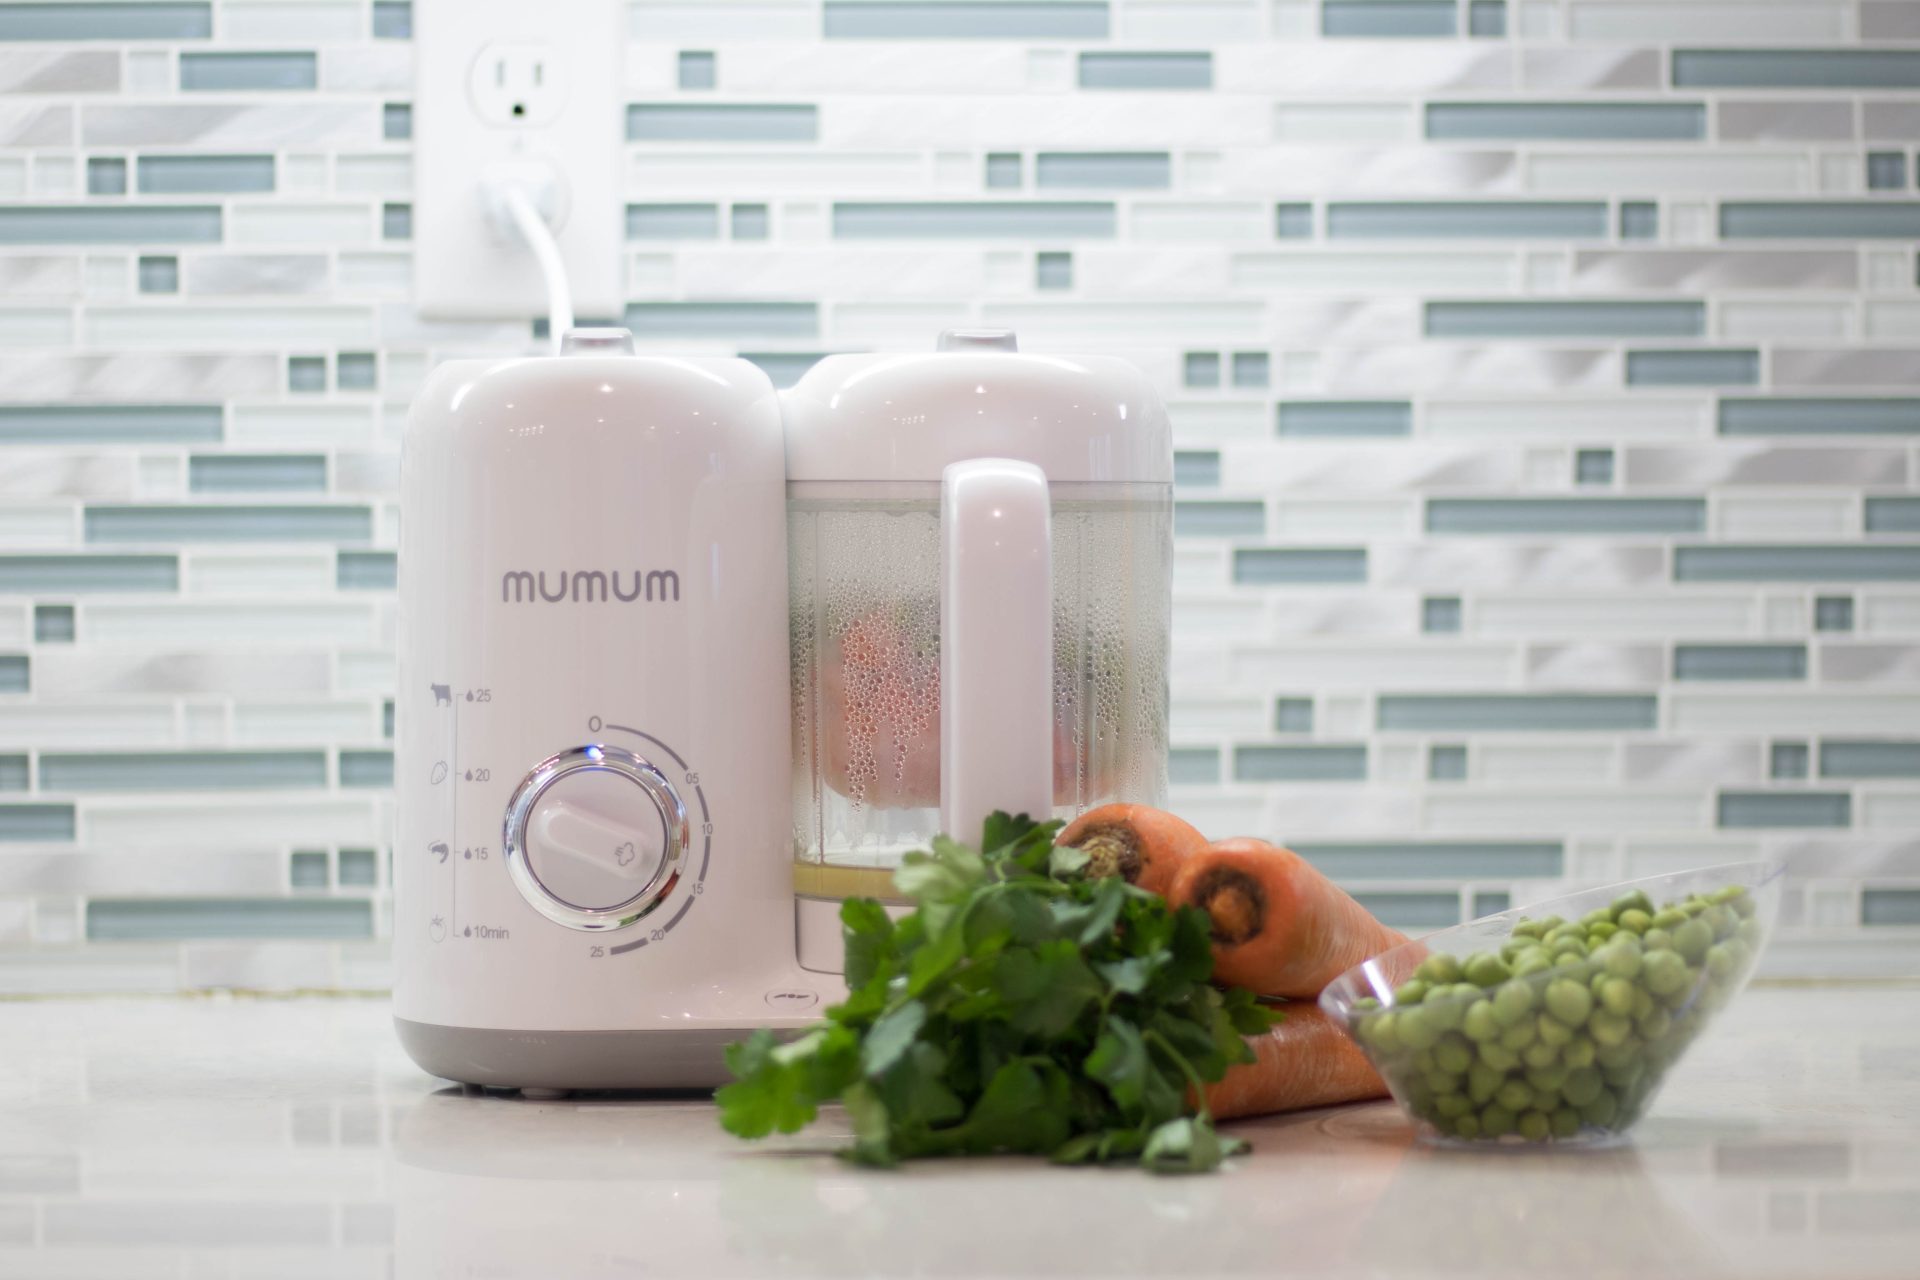 Best Baby Food Processor: Mumum